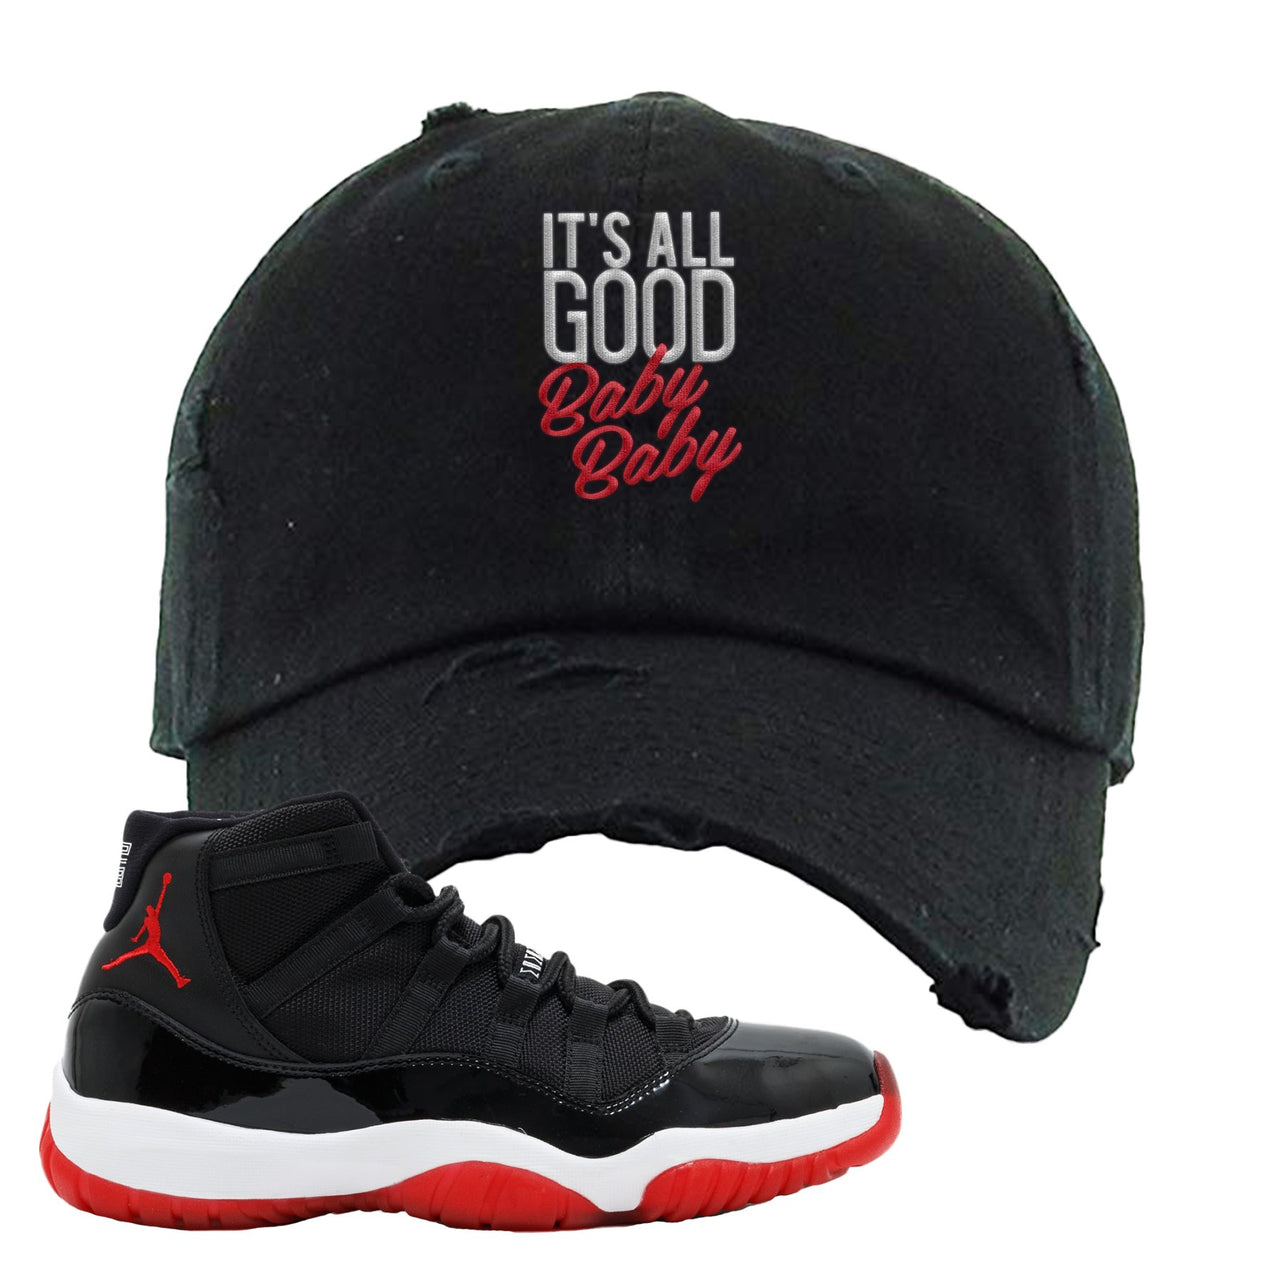 Jordan 11 Bred It's All Good Baby Baby Black Sneaker Hook Up Distressed Dad Hat